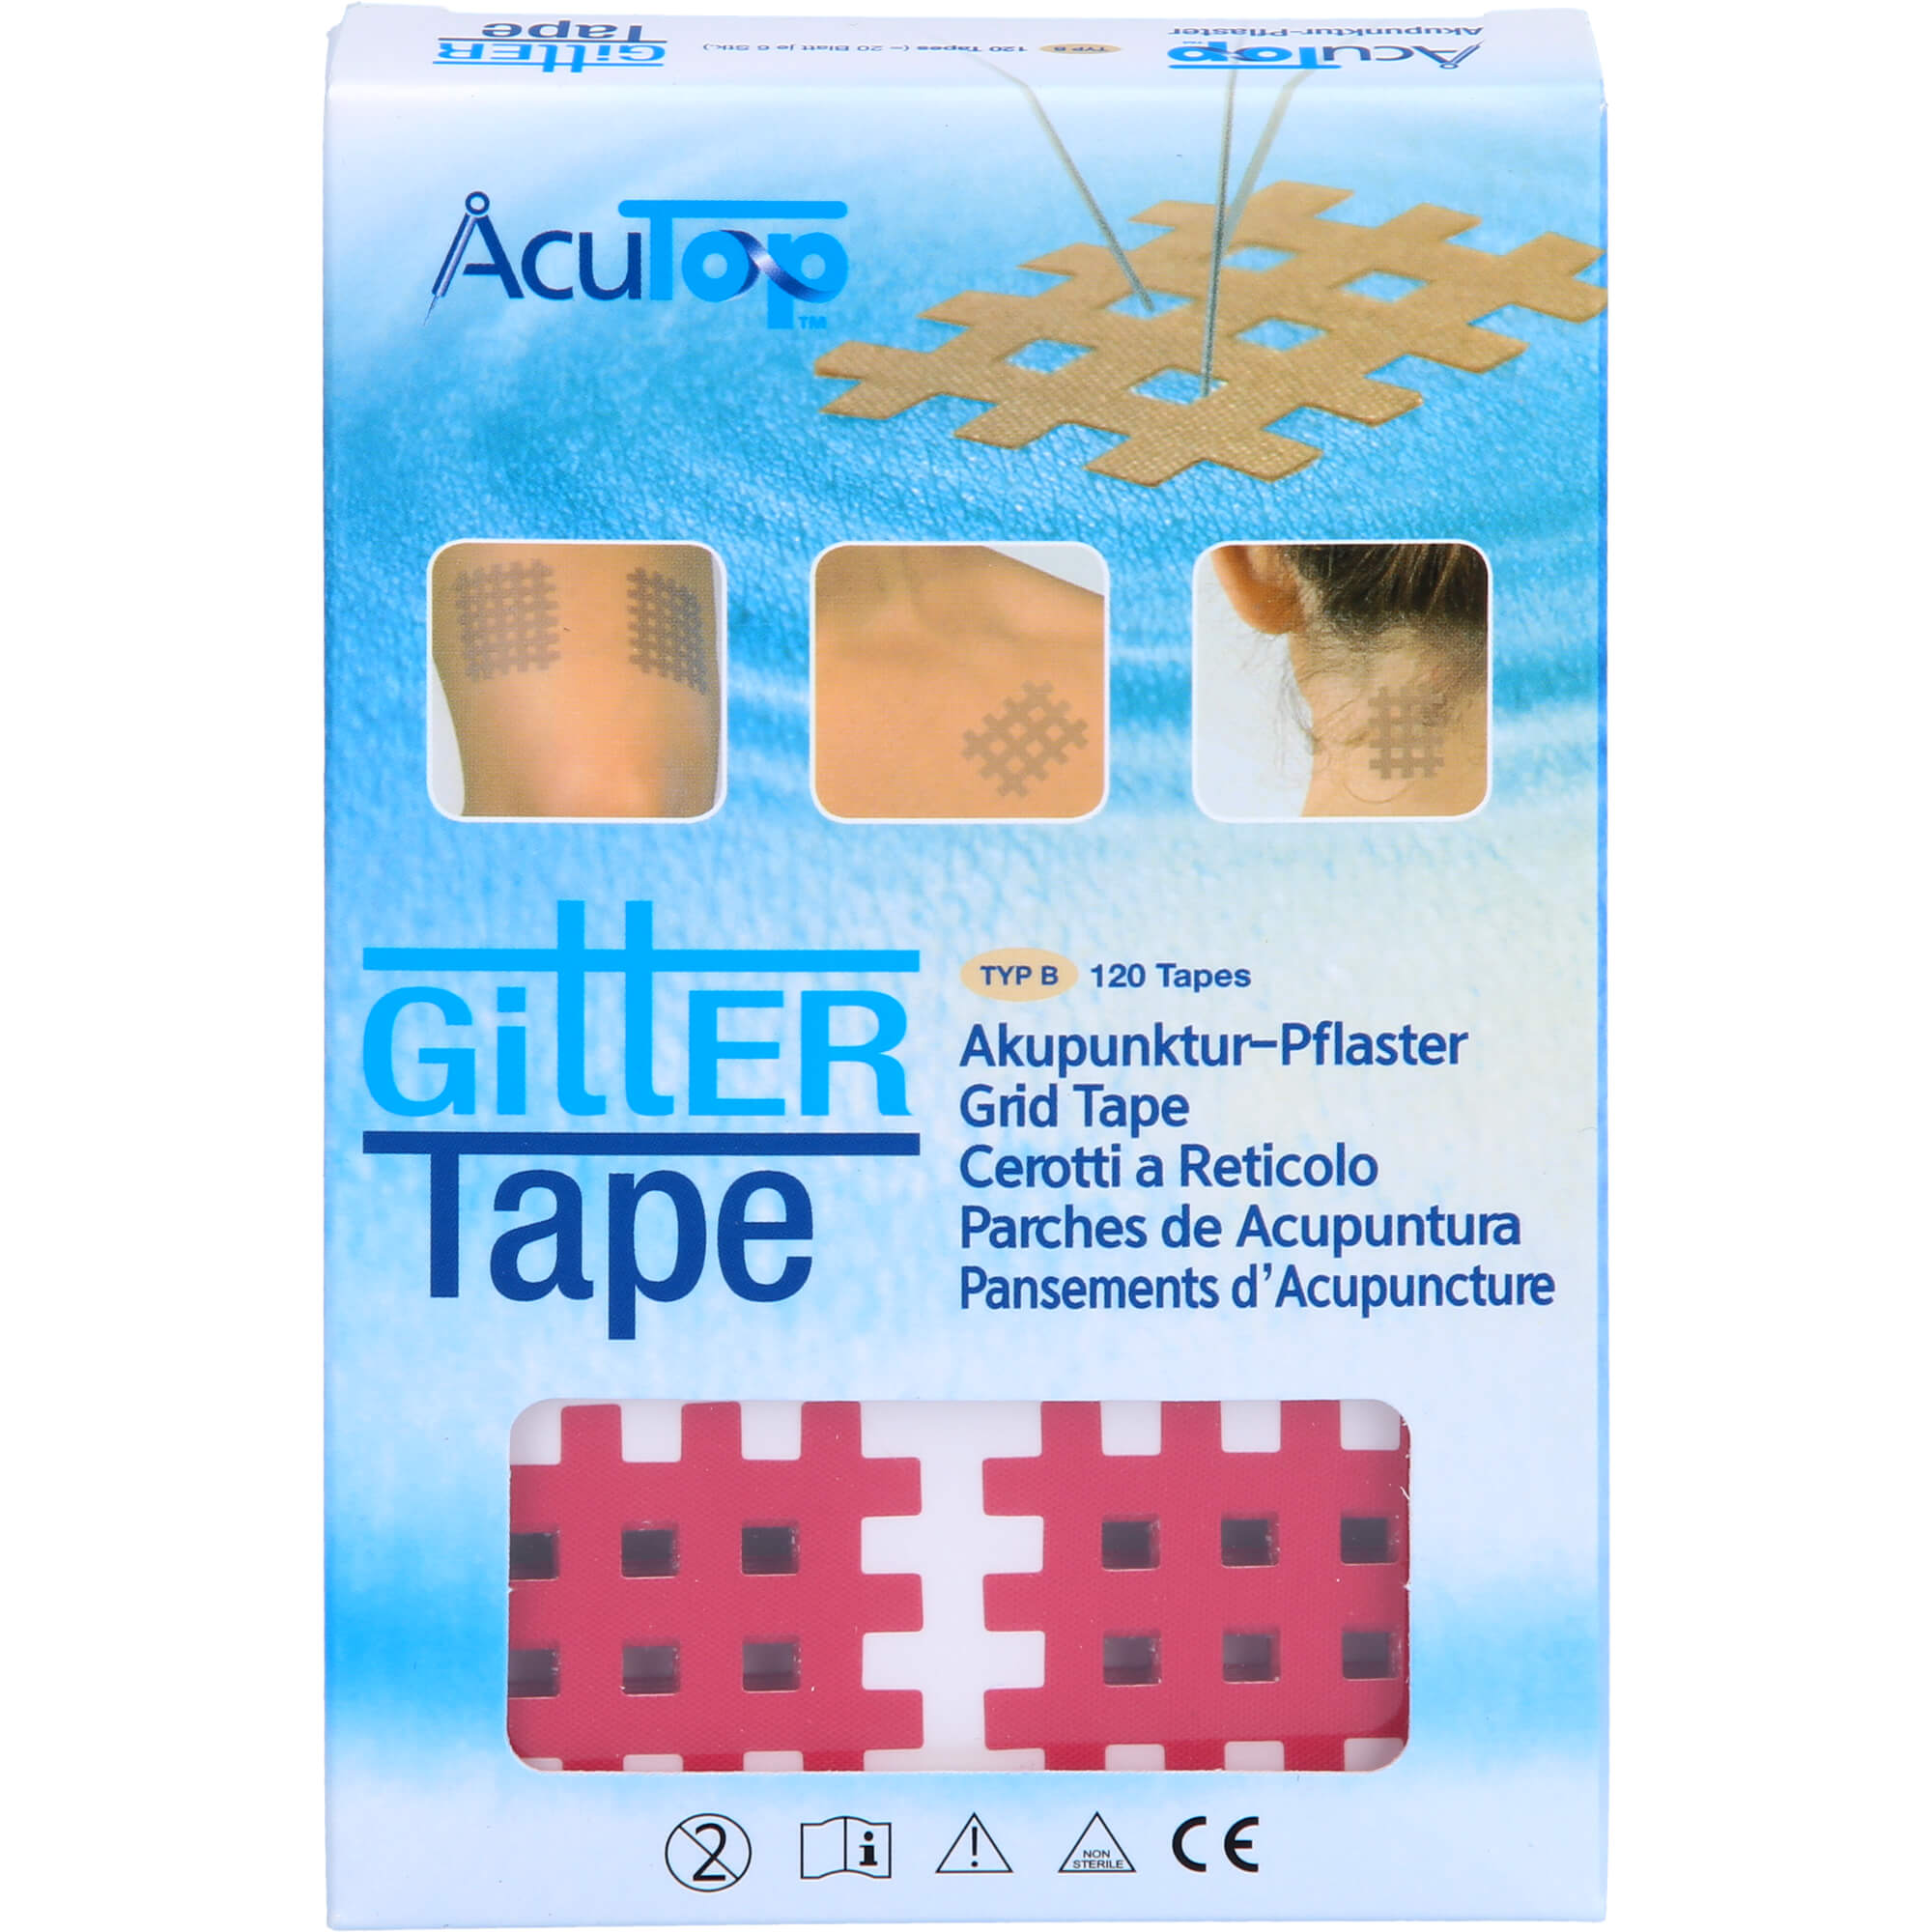 GITTER Tape AcuTop Akupunkturpflaster 3x4 cm pink